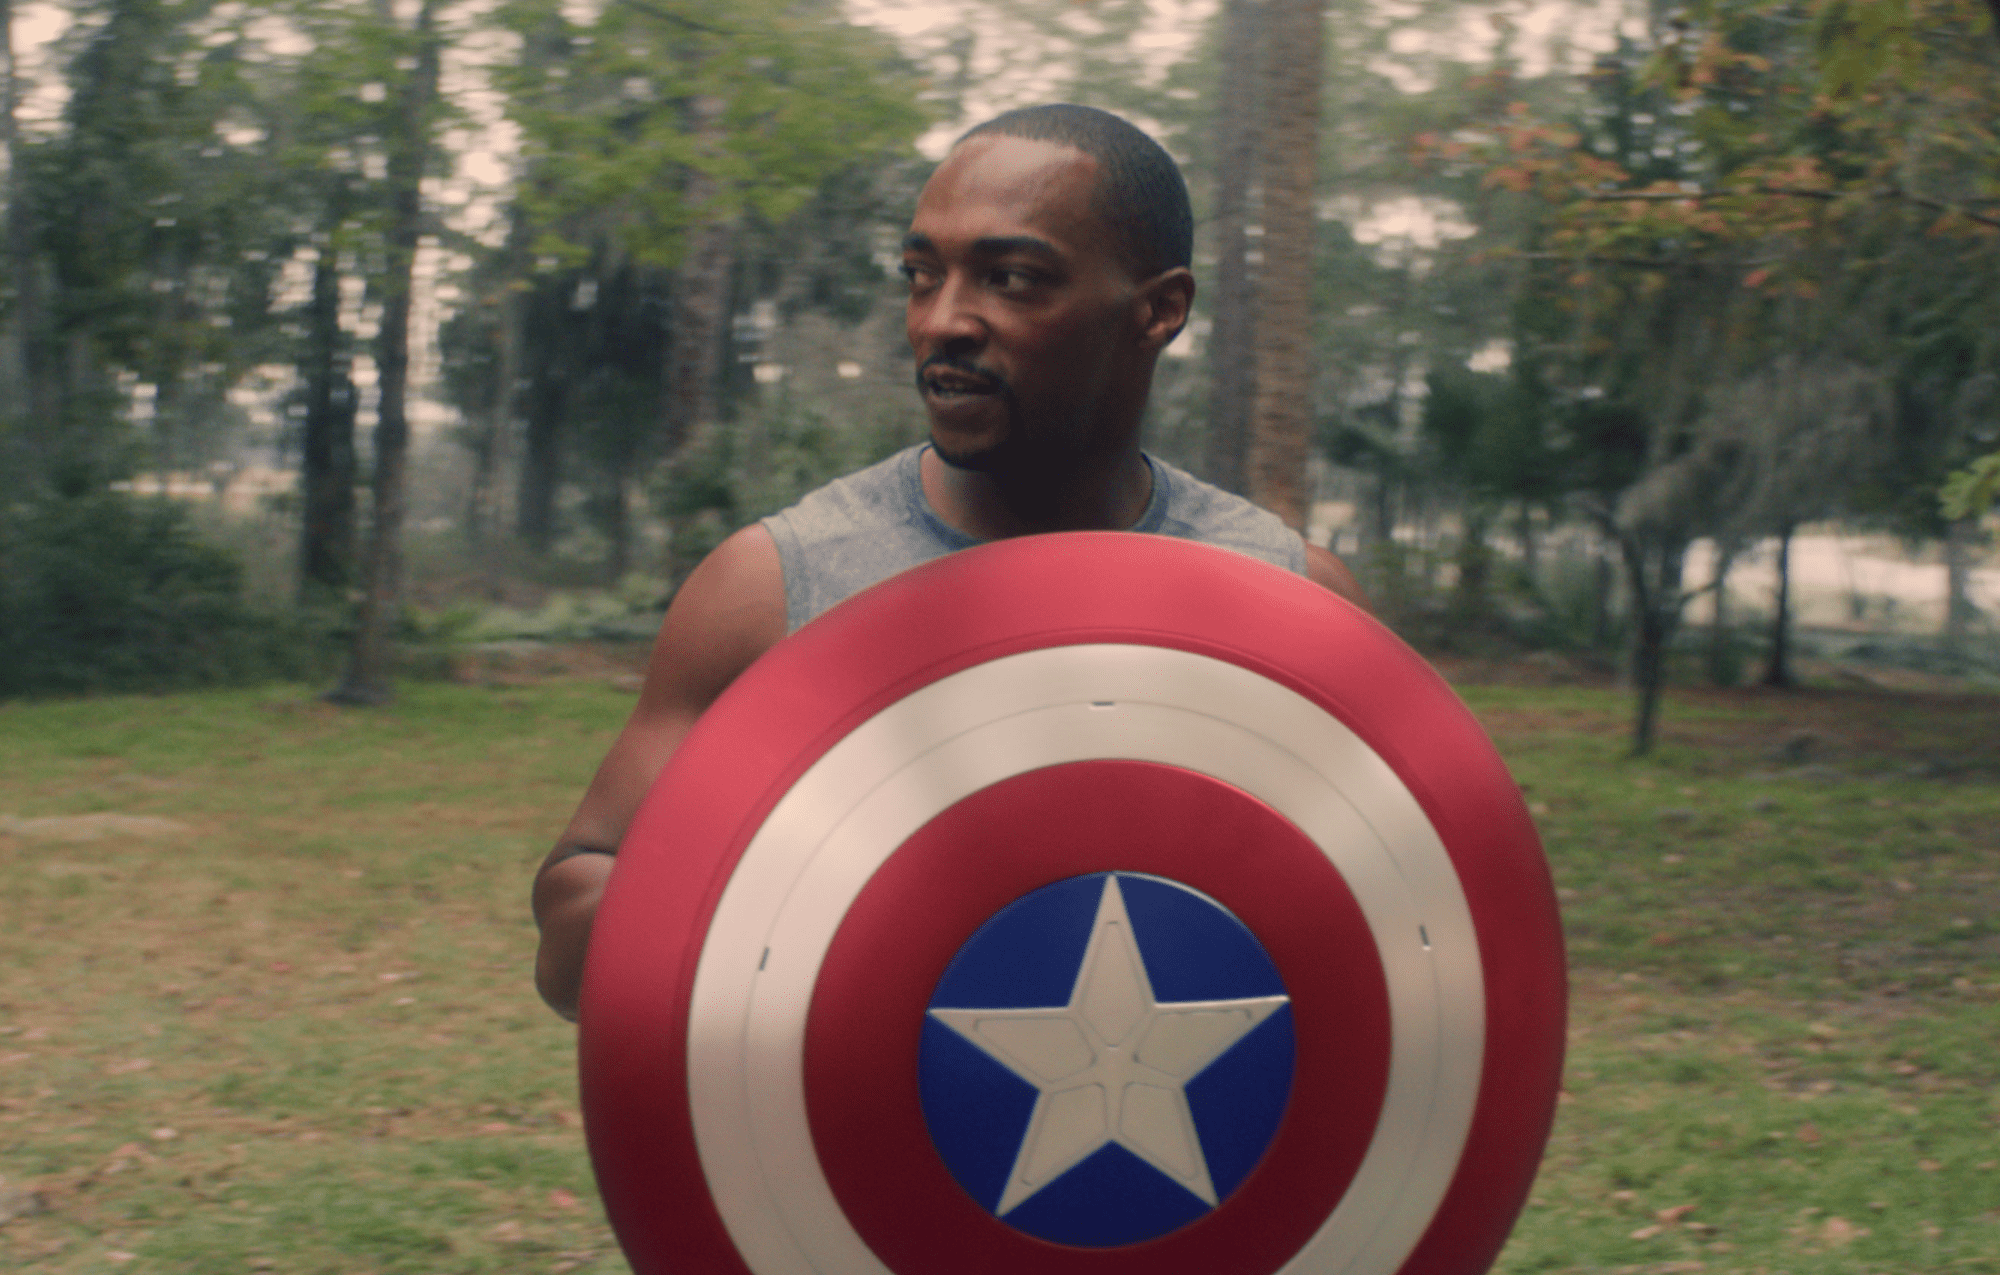 Sam training with Captain America’s shield